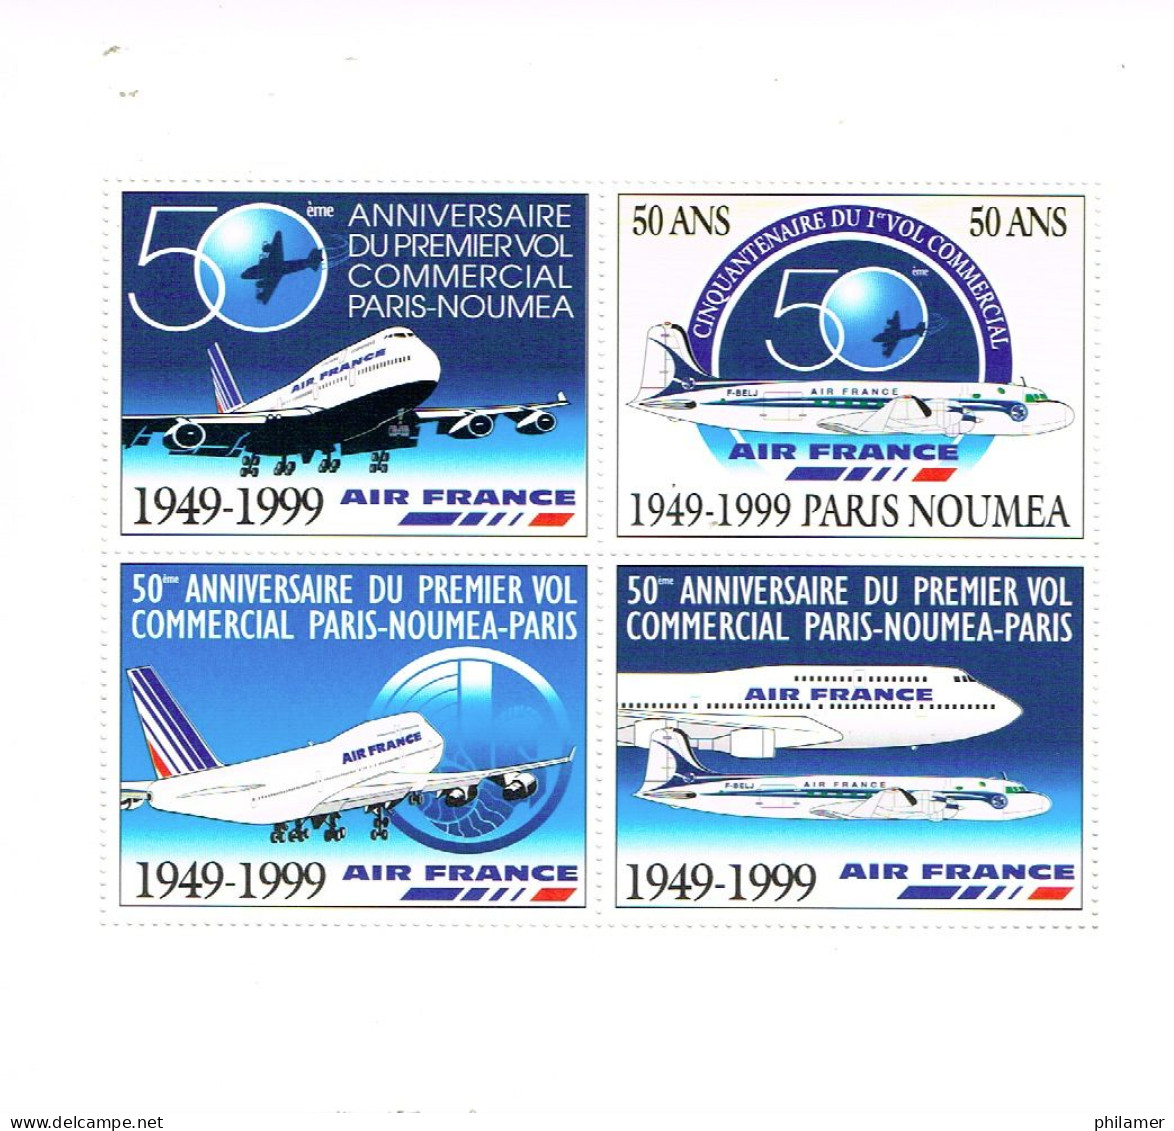 Nouvelle Caledonie Caledonia Bloc 4 Vignettes Postales Cinderela Extraite Carnet Aircalin 1999 Avion Neuve TBE - Gebruikt